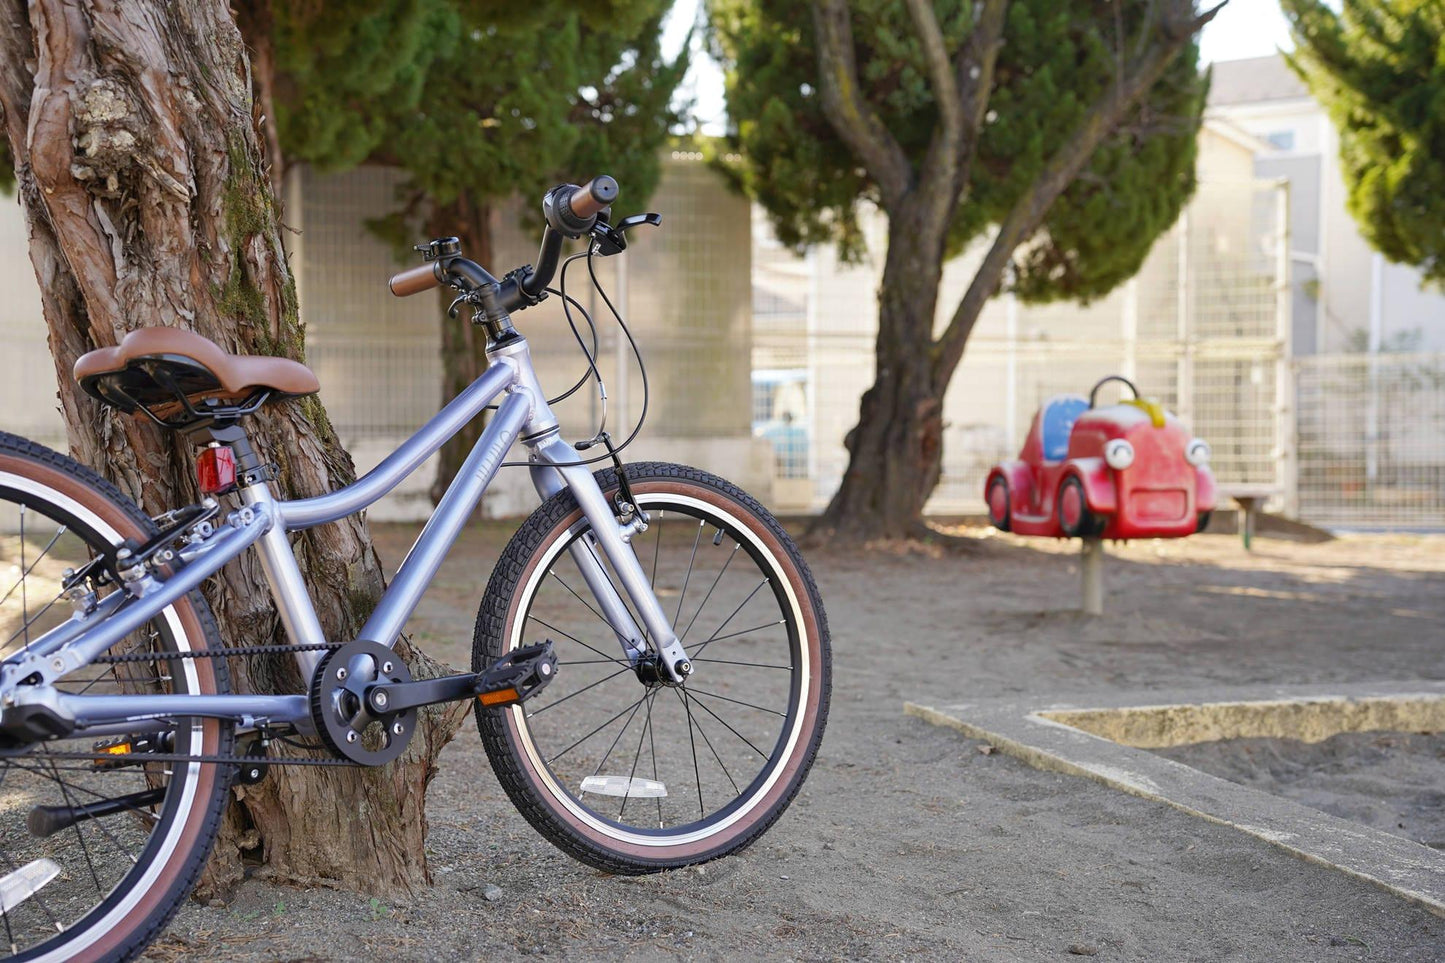 子供自転車 wimo kids 20 (Nasu / ナス）| 6-9才 | 110-145cm | 8.35kg |内装3段変速 - wimo online store - オシャレ電動自転車 - 最軽量級子供自転車